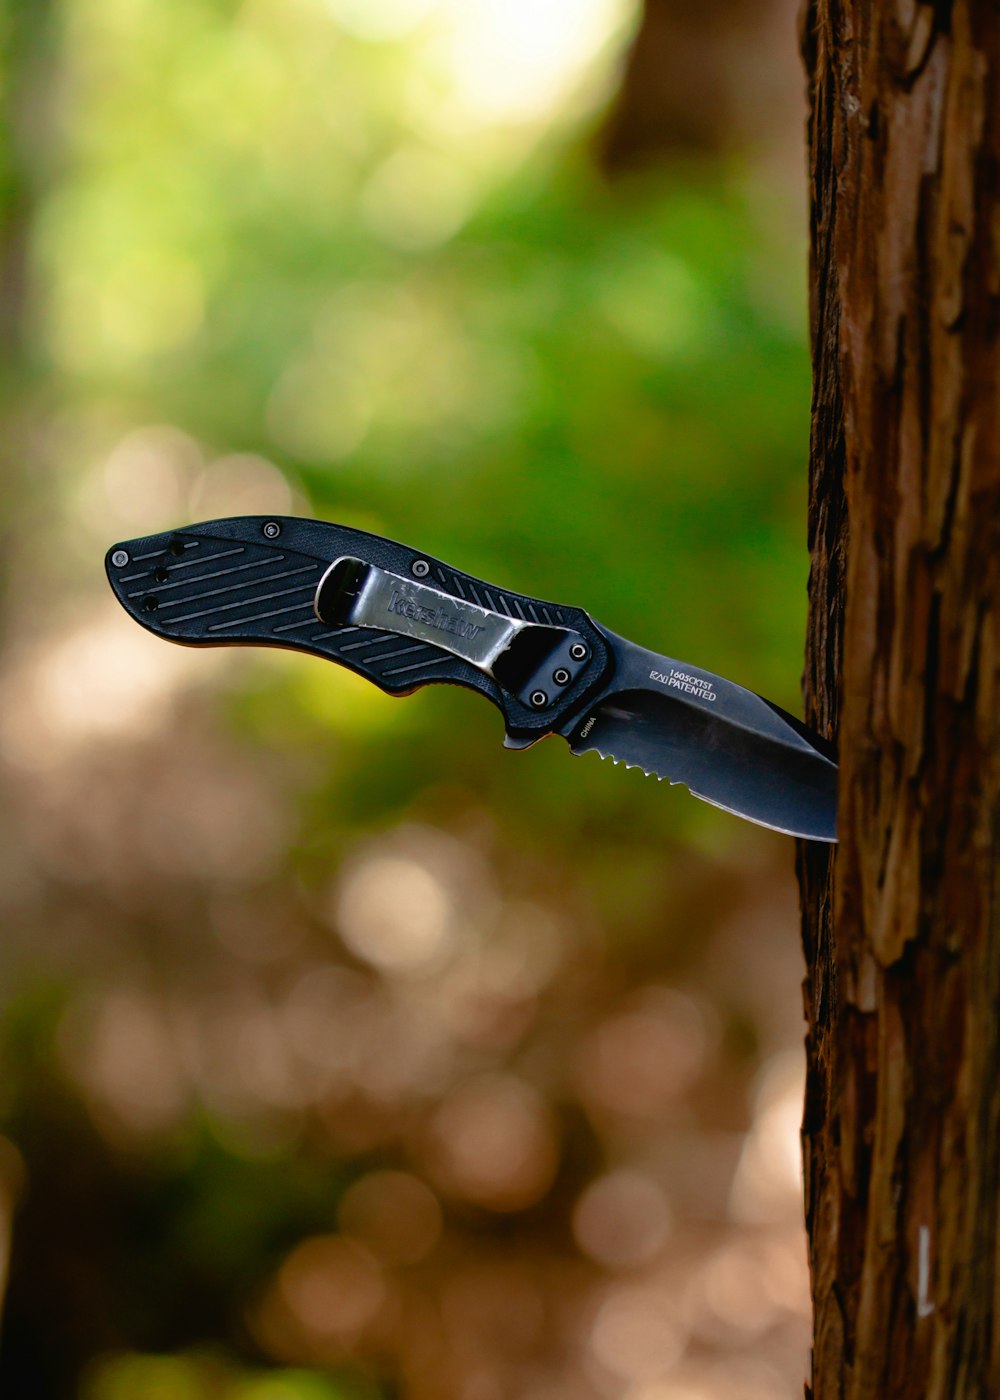 black pocket knife stick in tree trunk